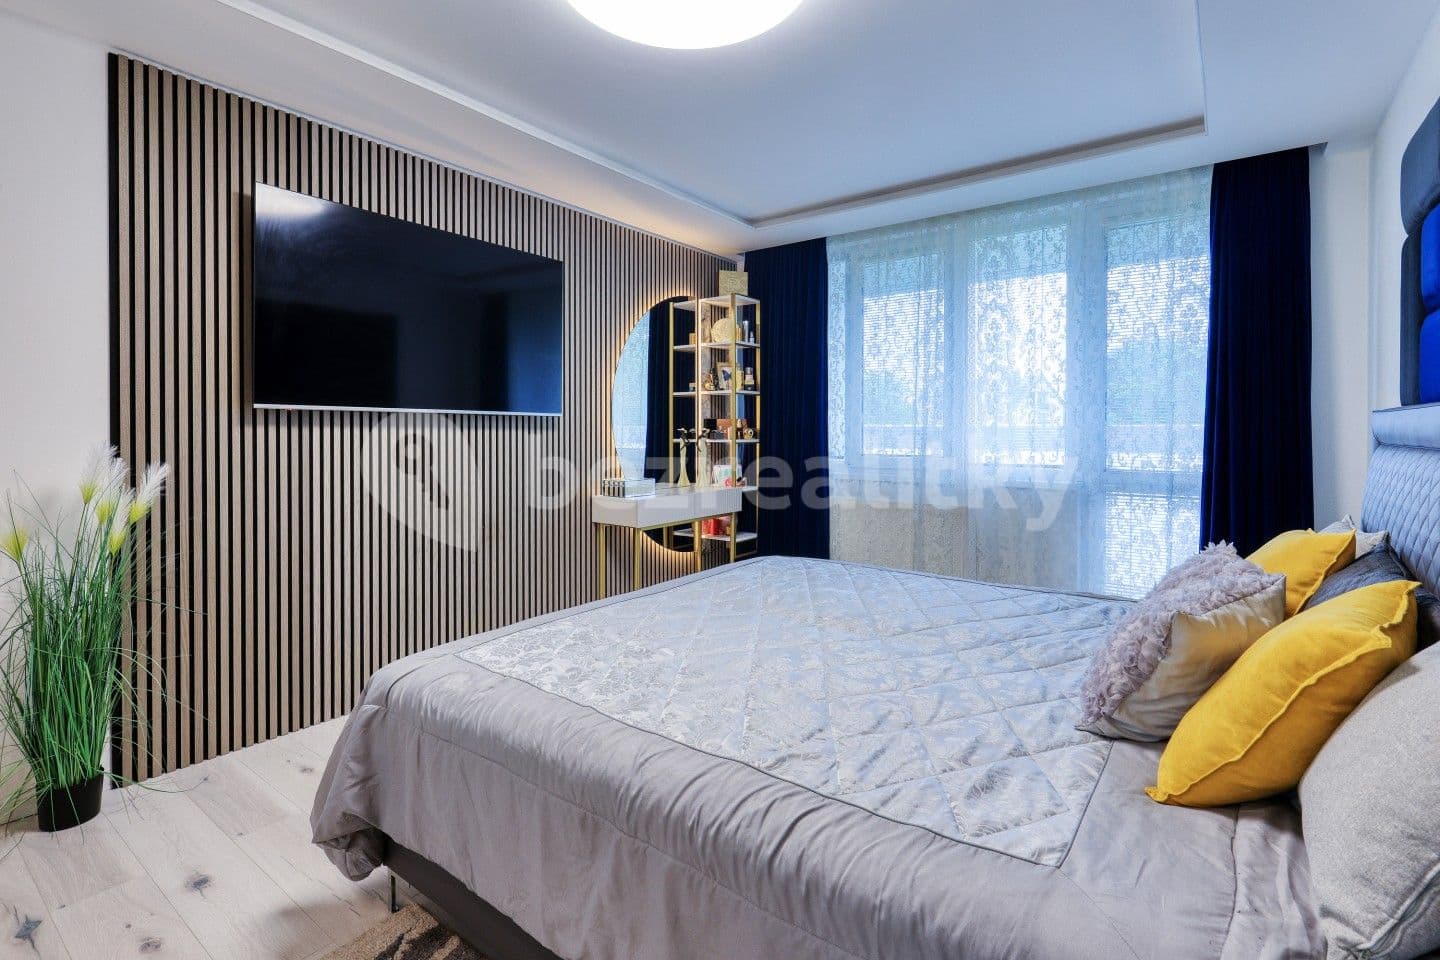 2 bedroom flat for sale, 61 m², Sídliště II, Nýrsko, Plzeňský Region